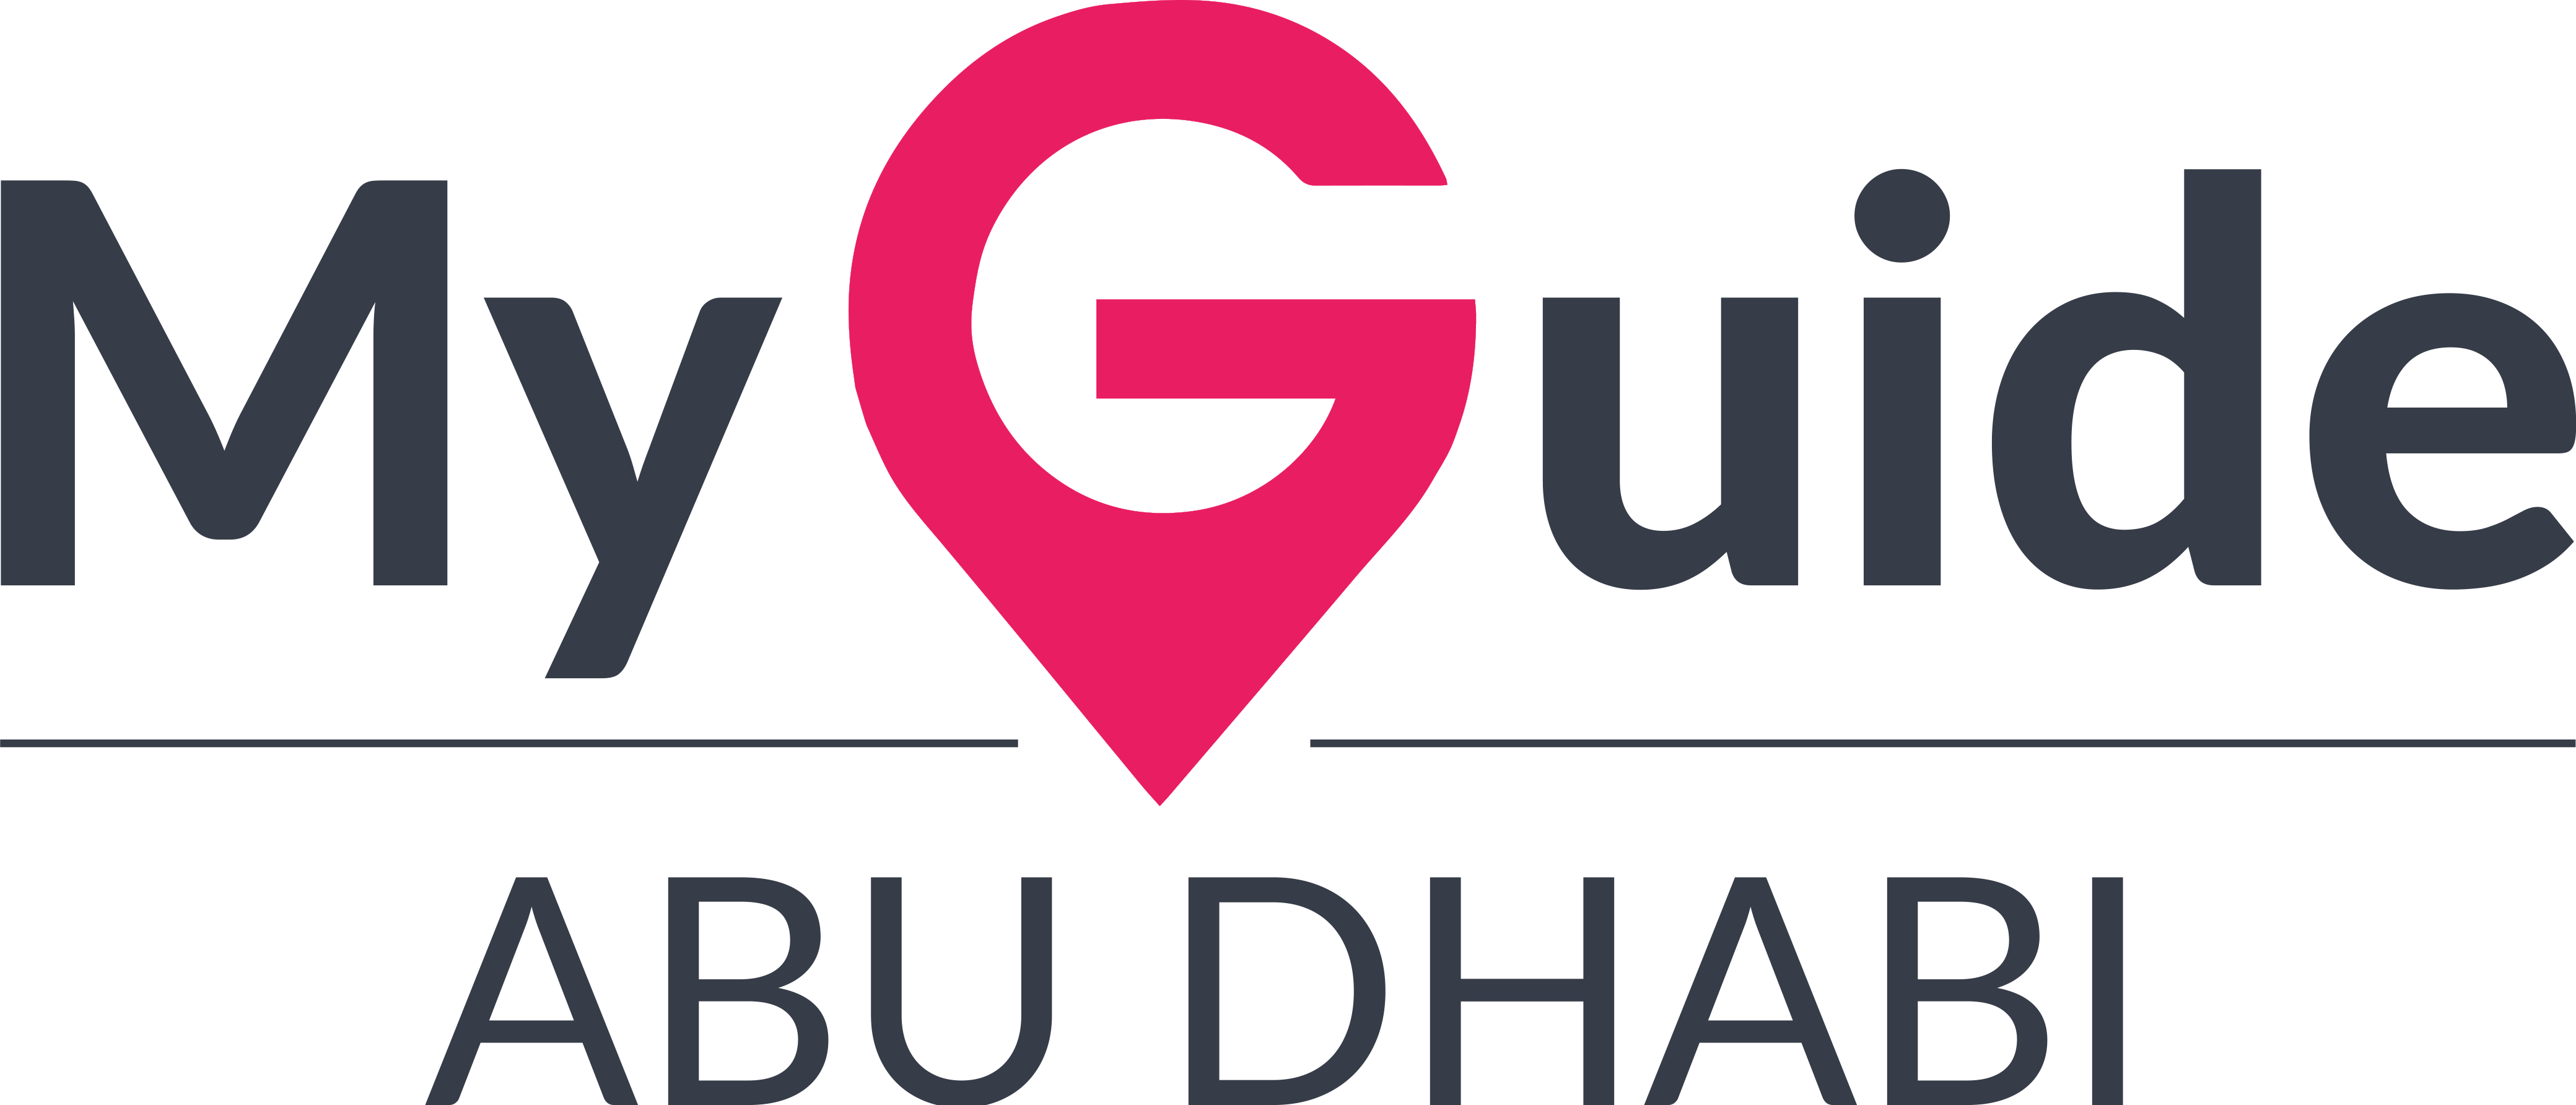 My Guide Abu Dhabi